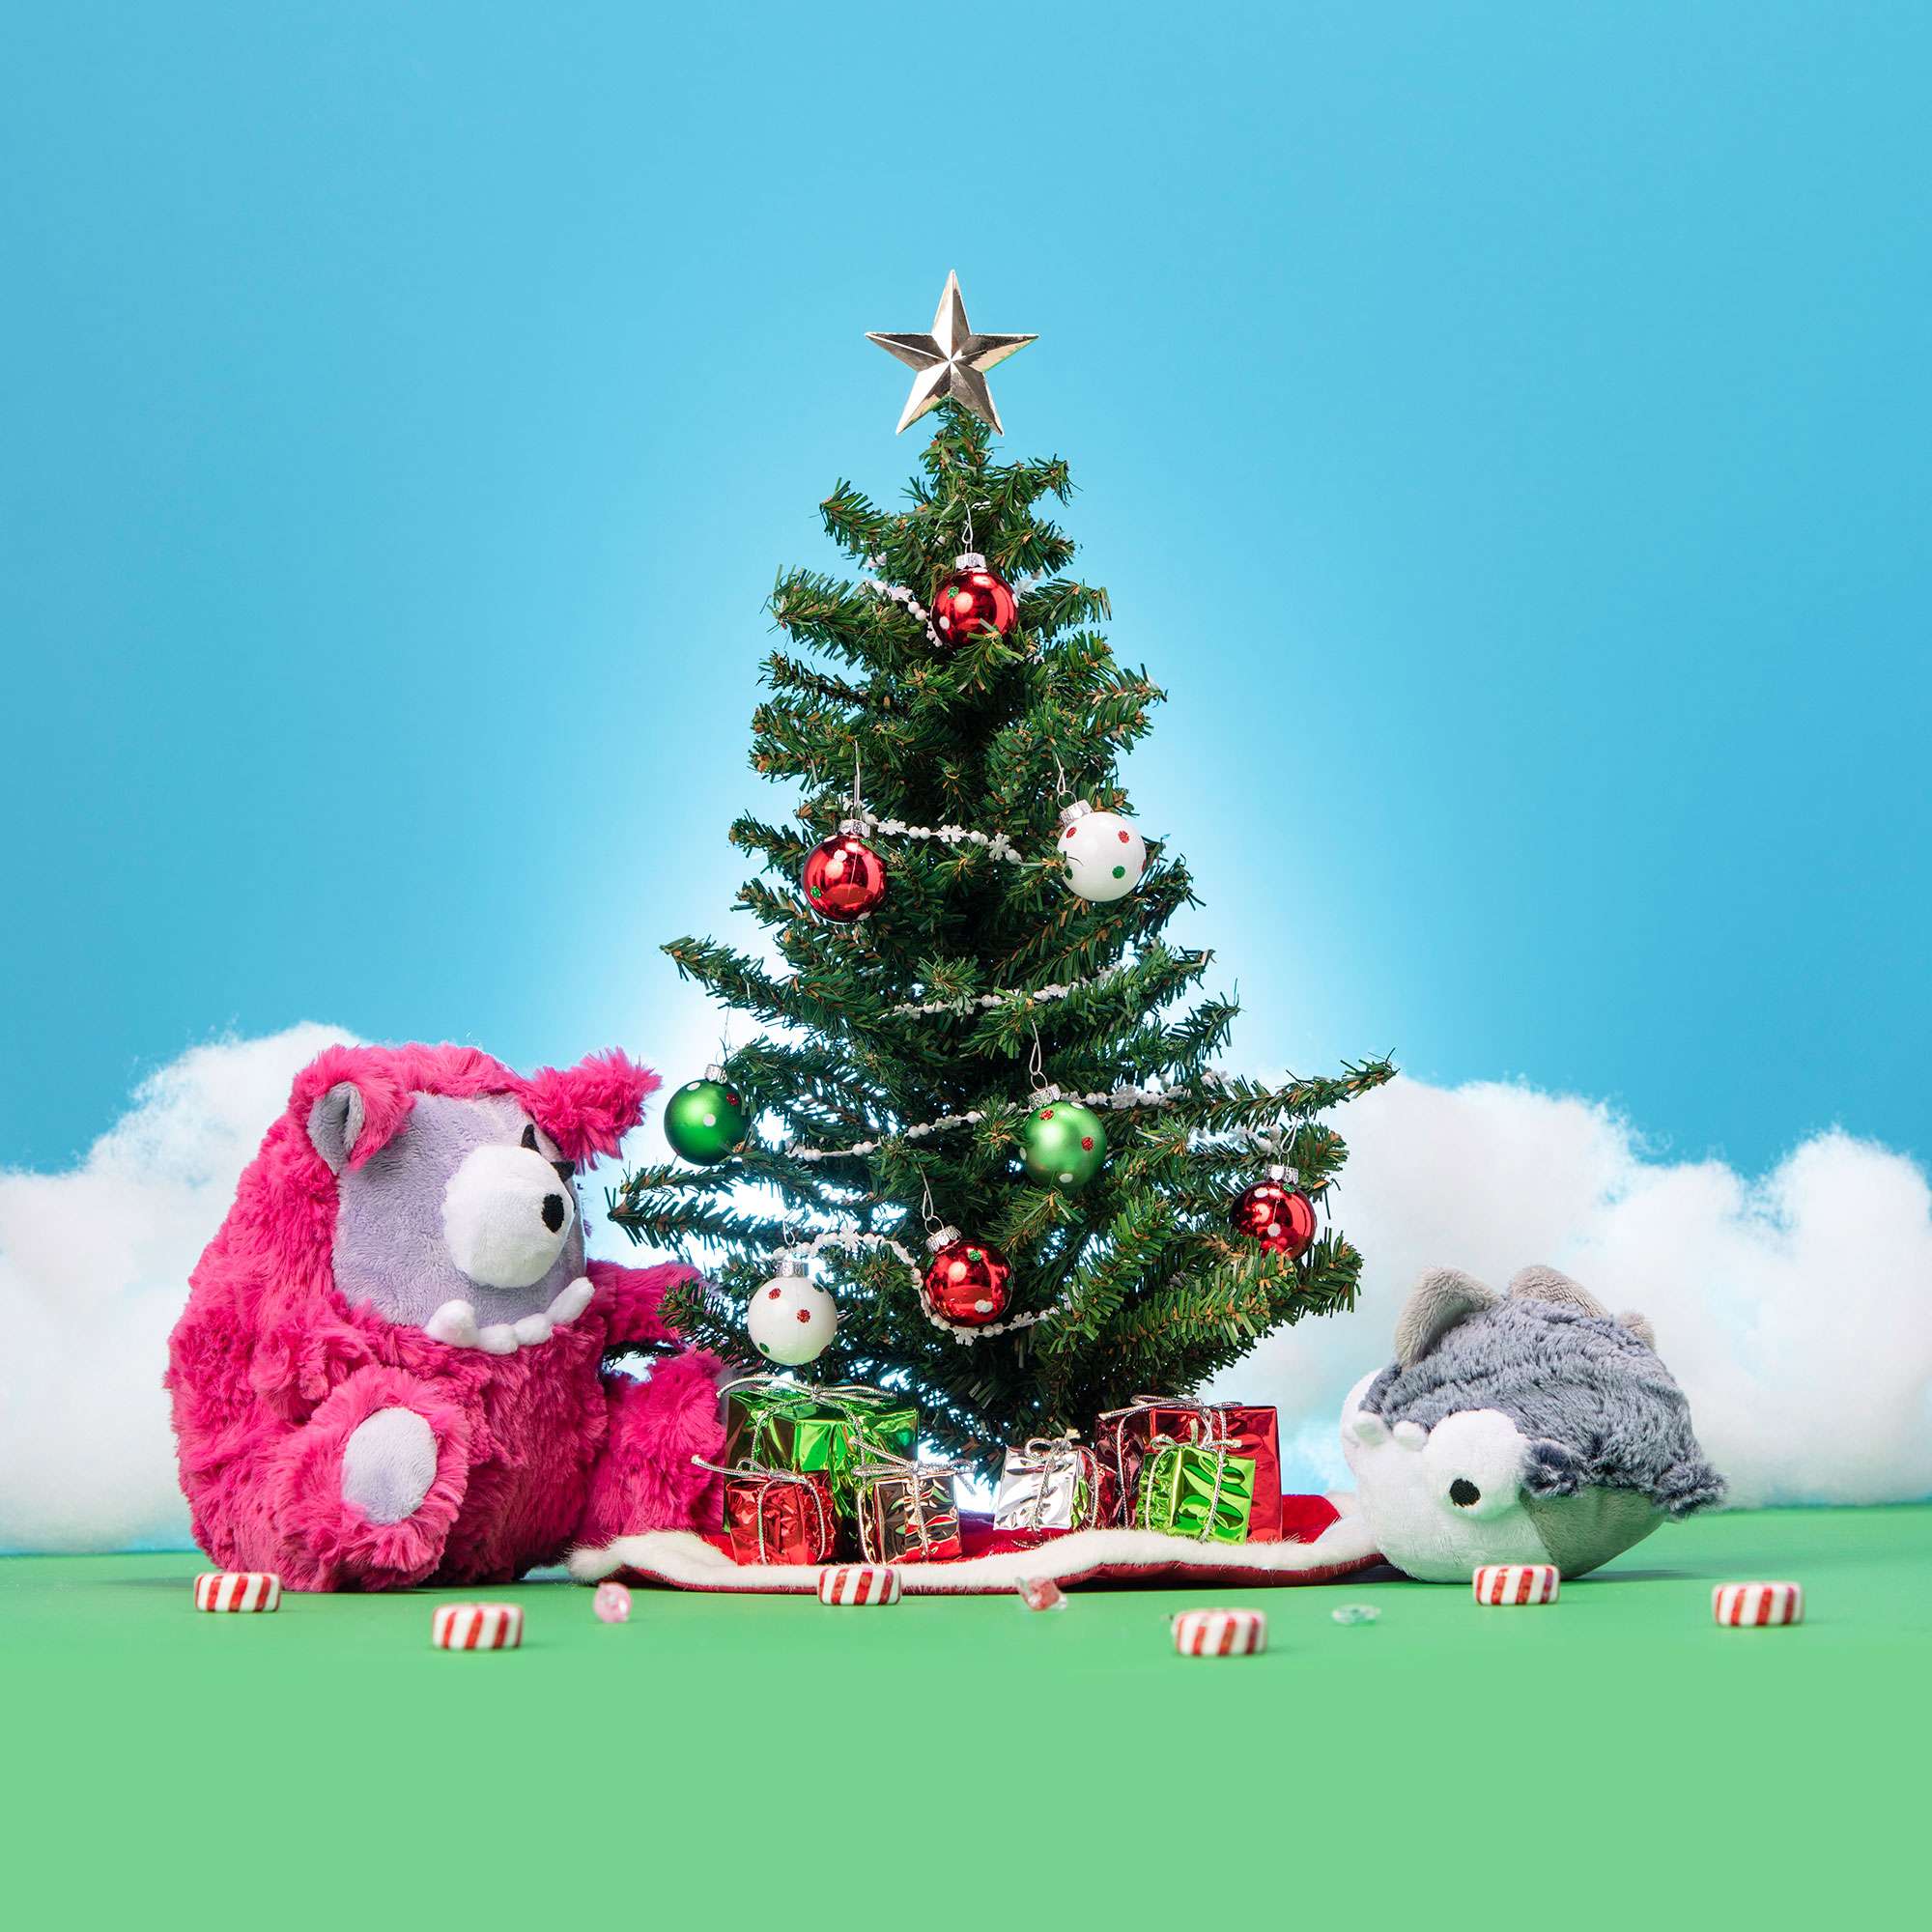 Lili and Spuggie Plush Toy Decorating Christmas Tree